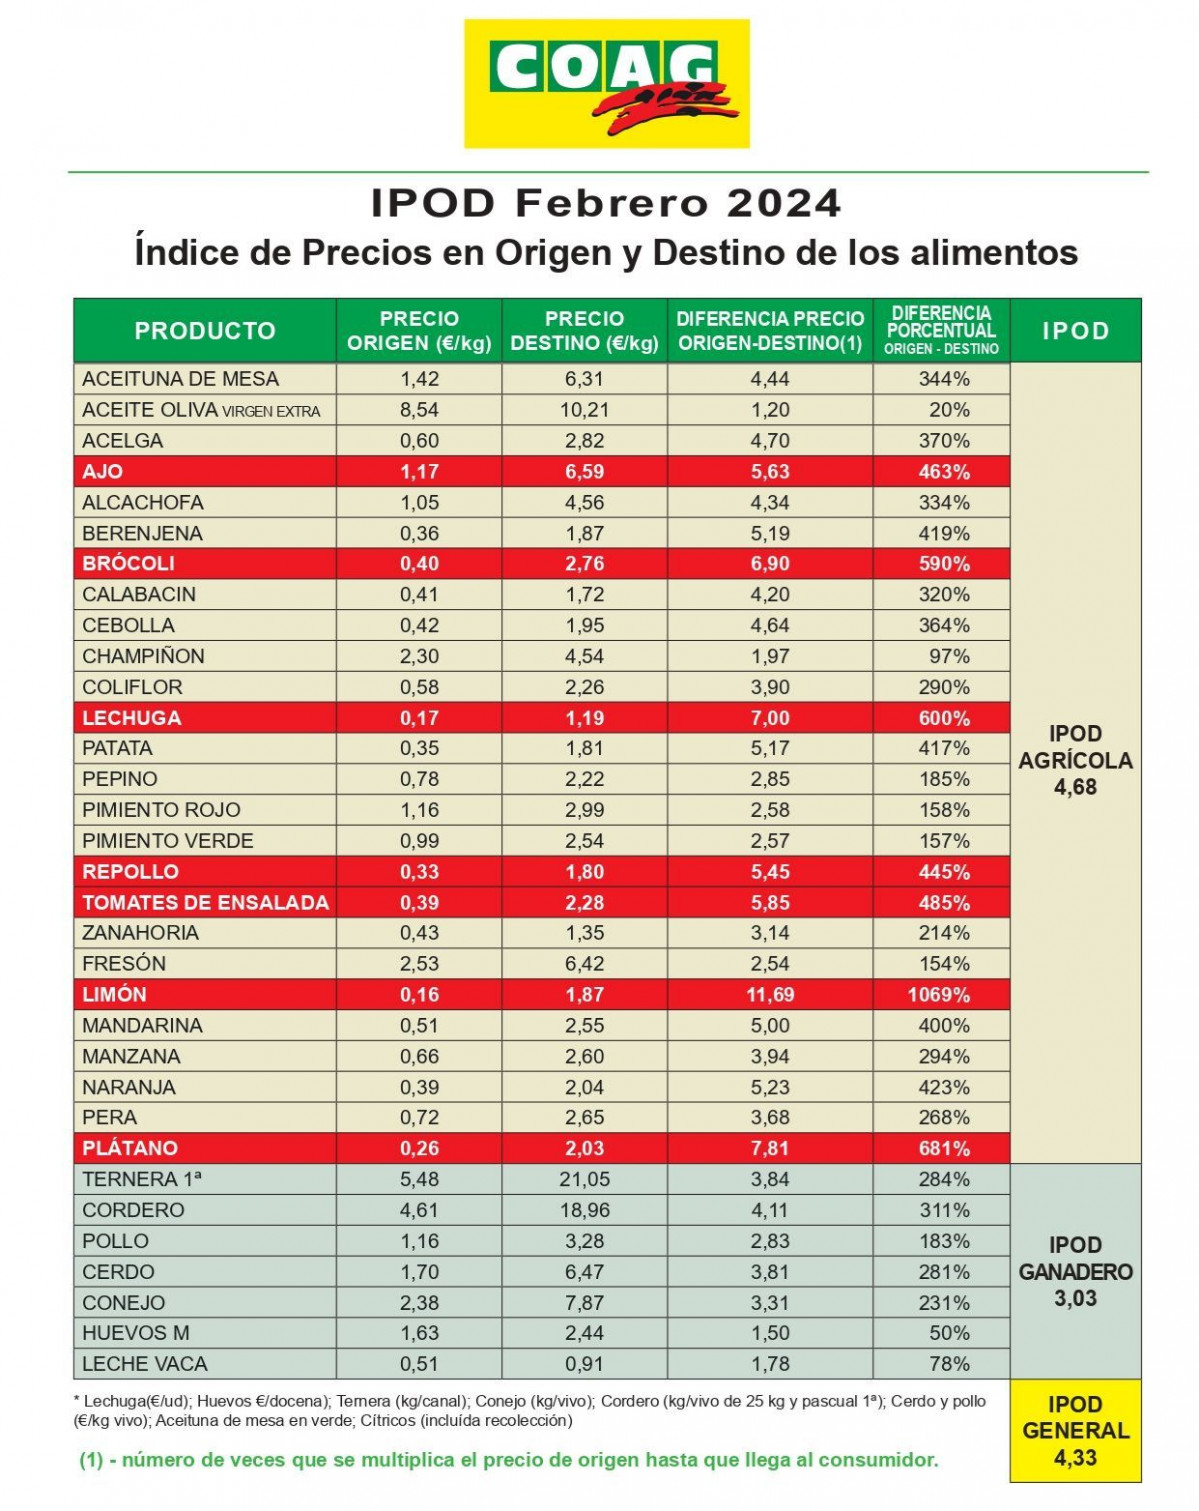 IPOD Febrero 2024 (Tabla COAG)